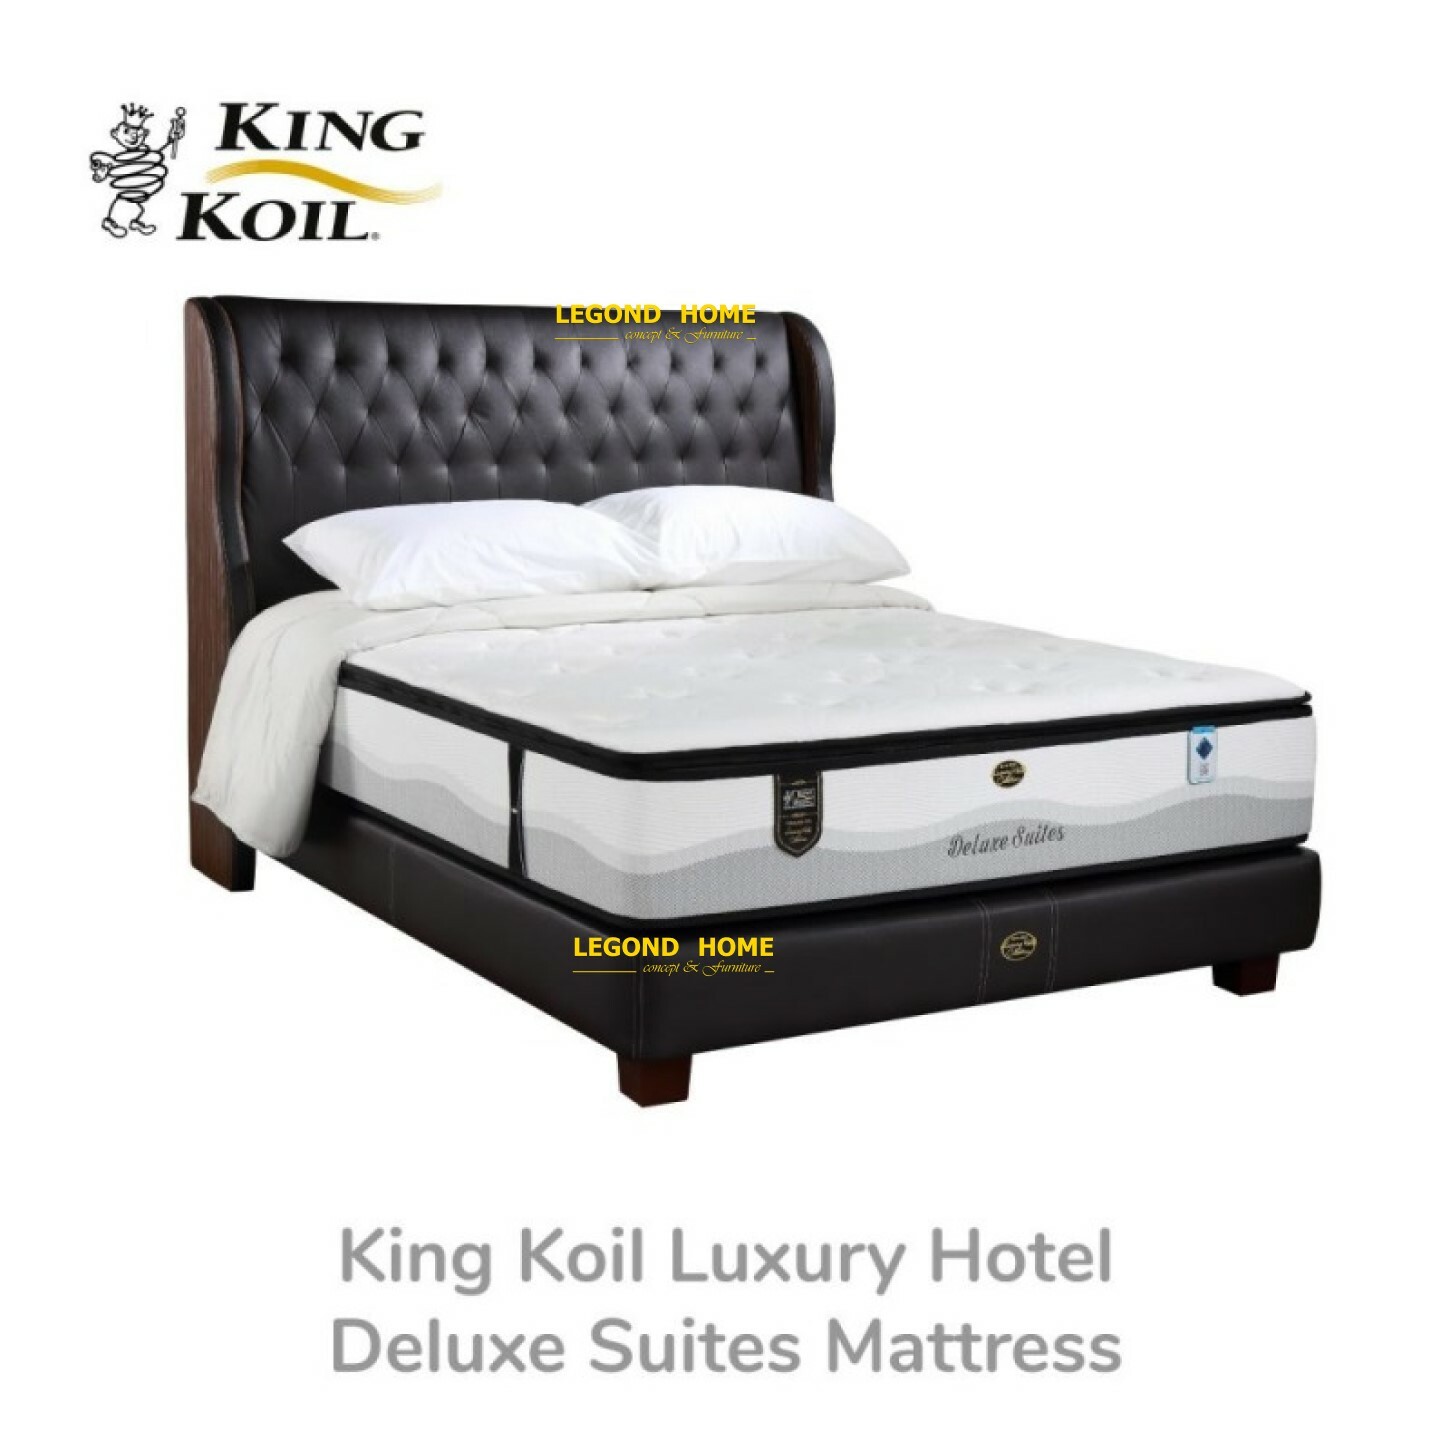 King-Koil-Luxury-Hotel-Deluxe-Suites-Mattress.jpg